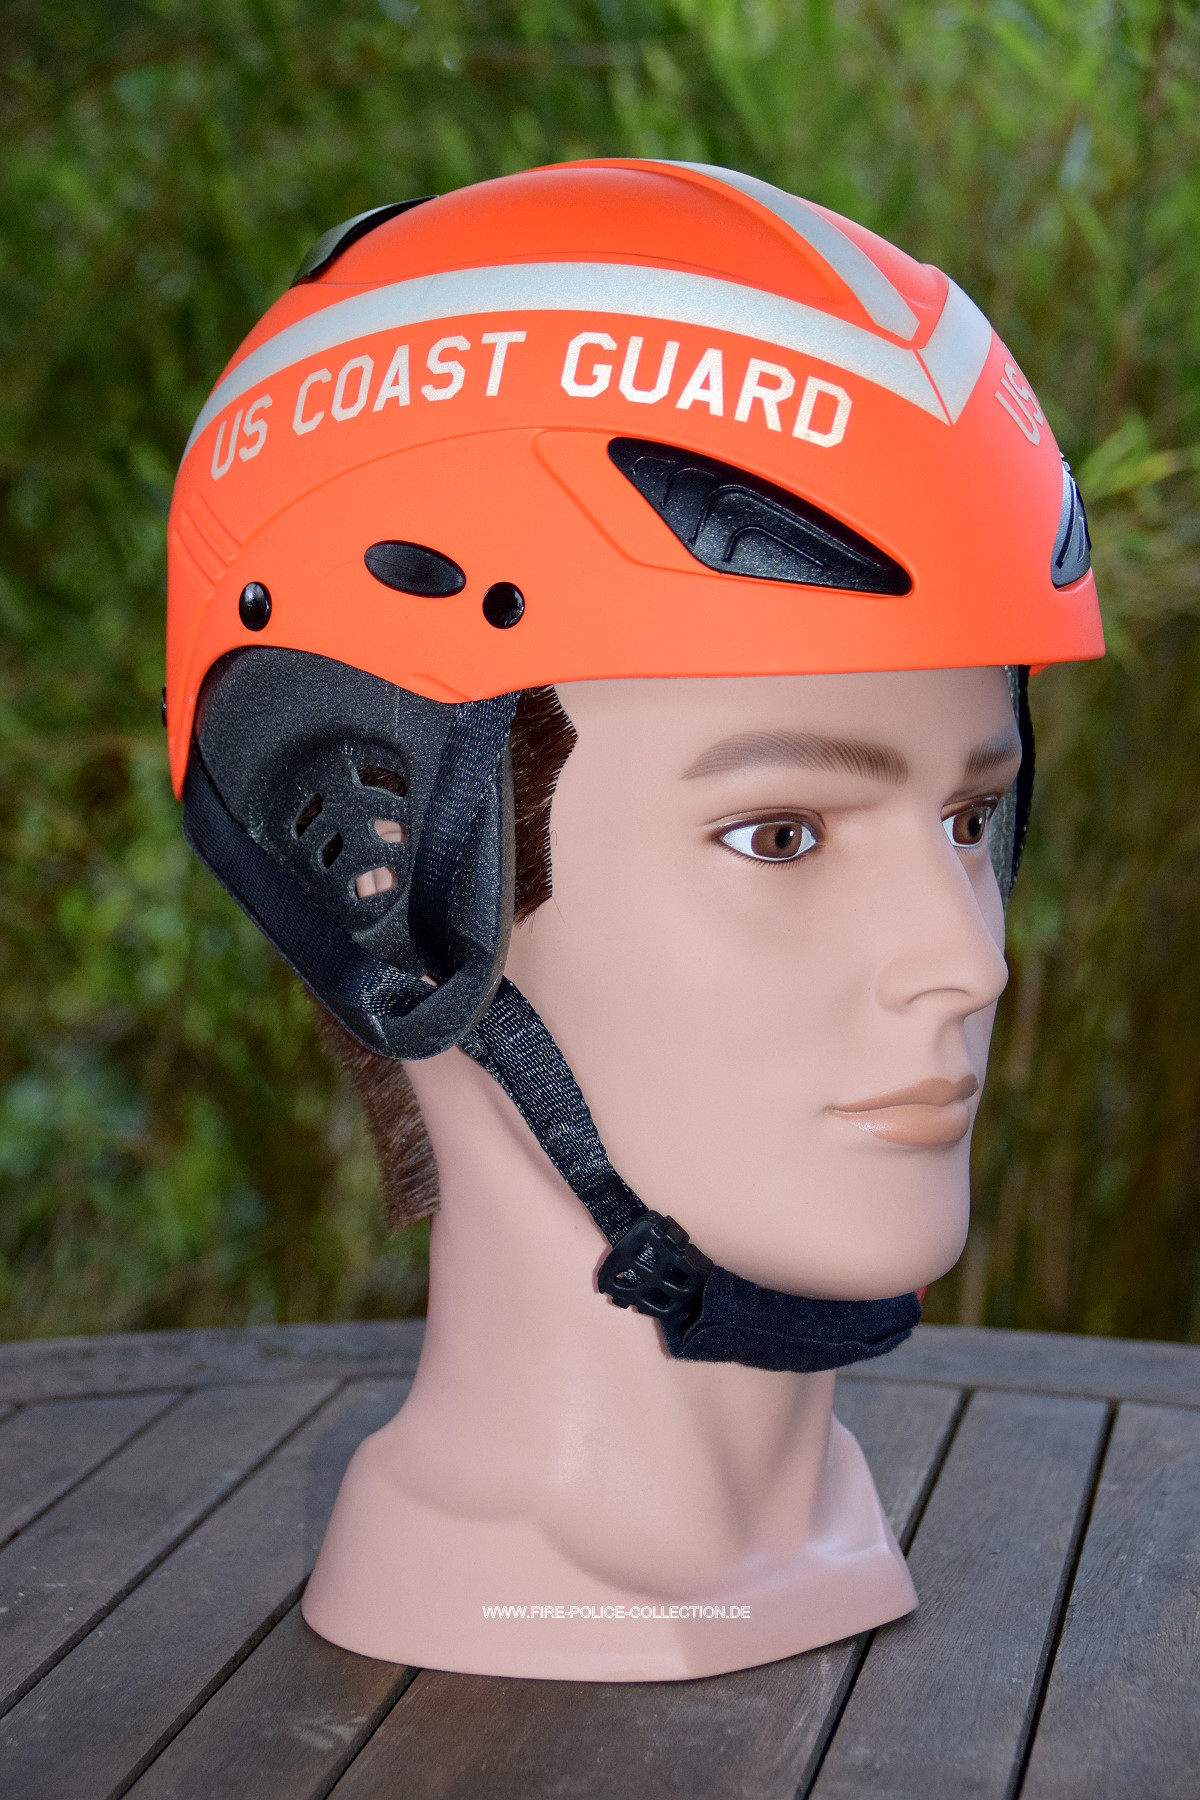 USCG helmet